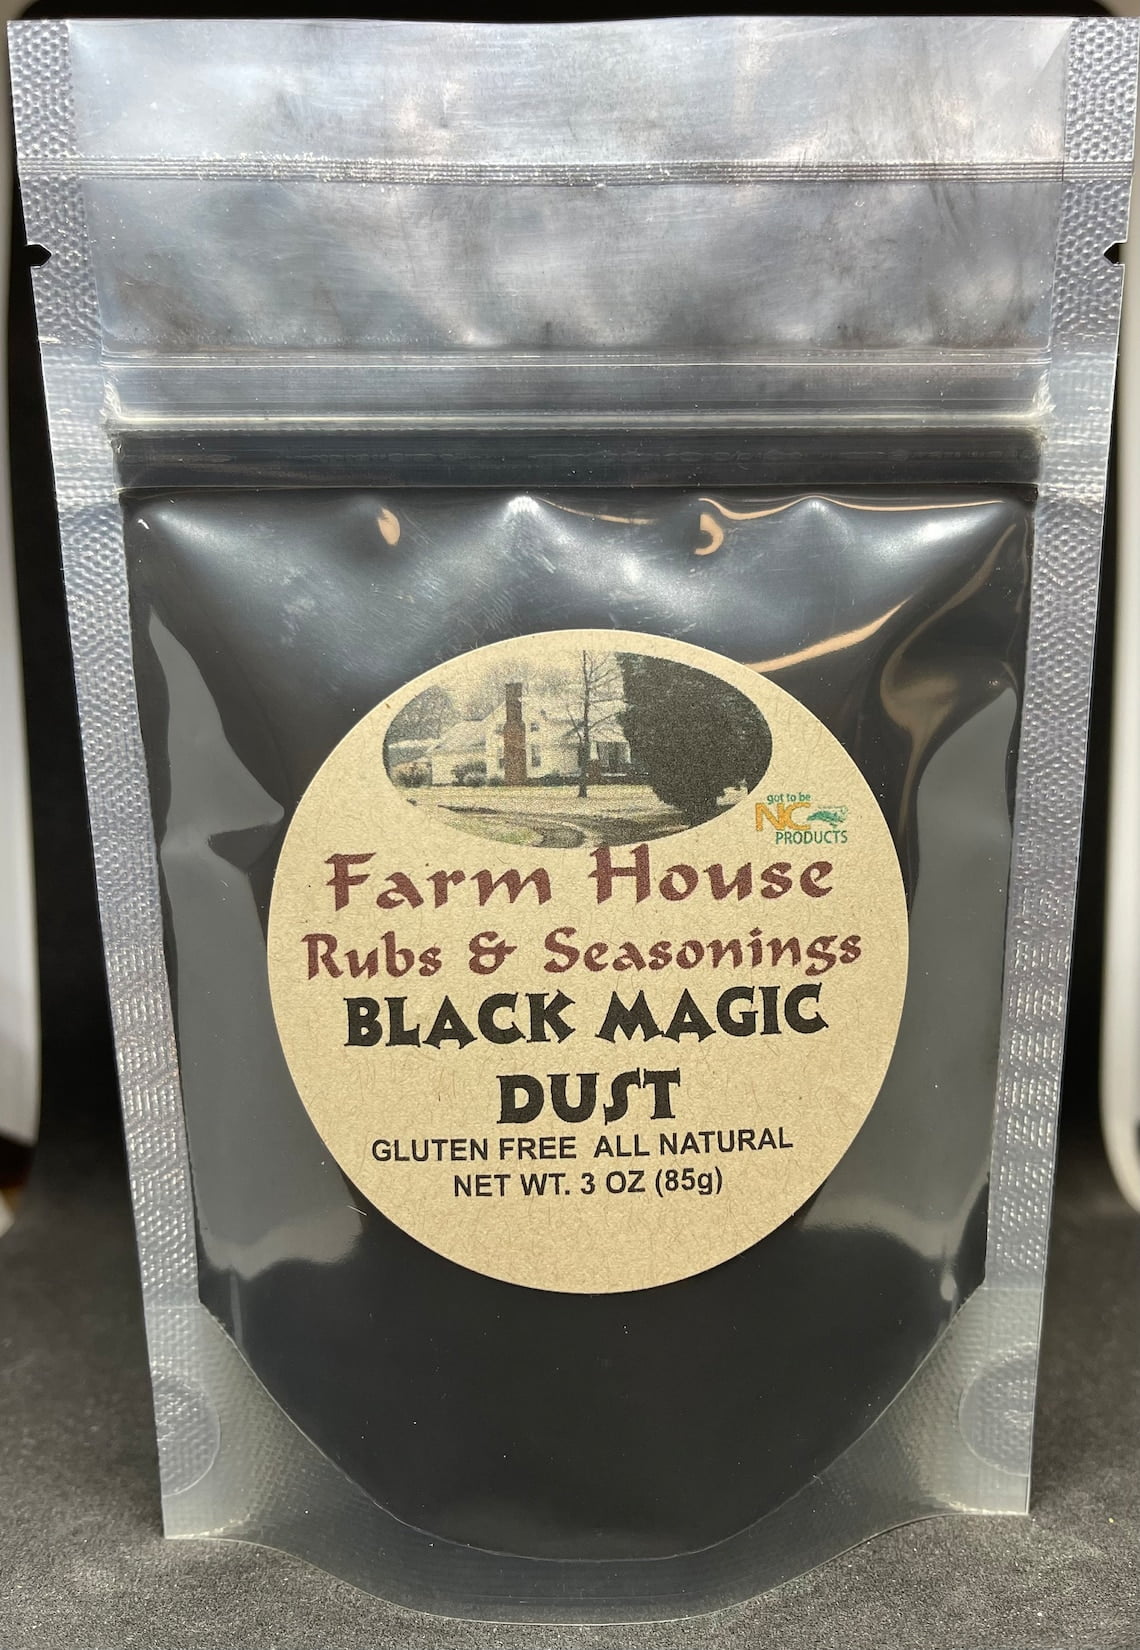 Farm House Dixie Dust rubs and seasonings